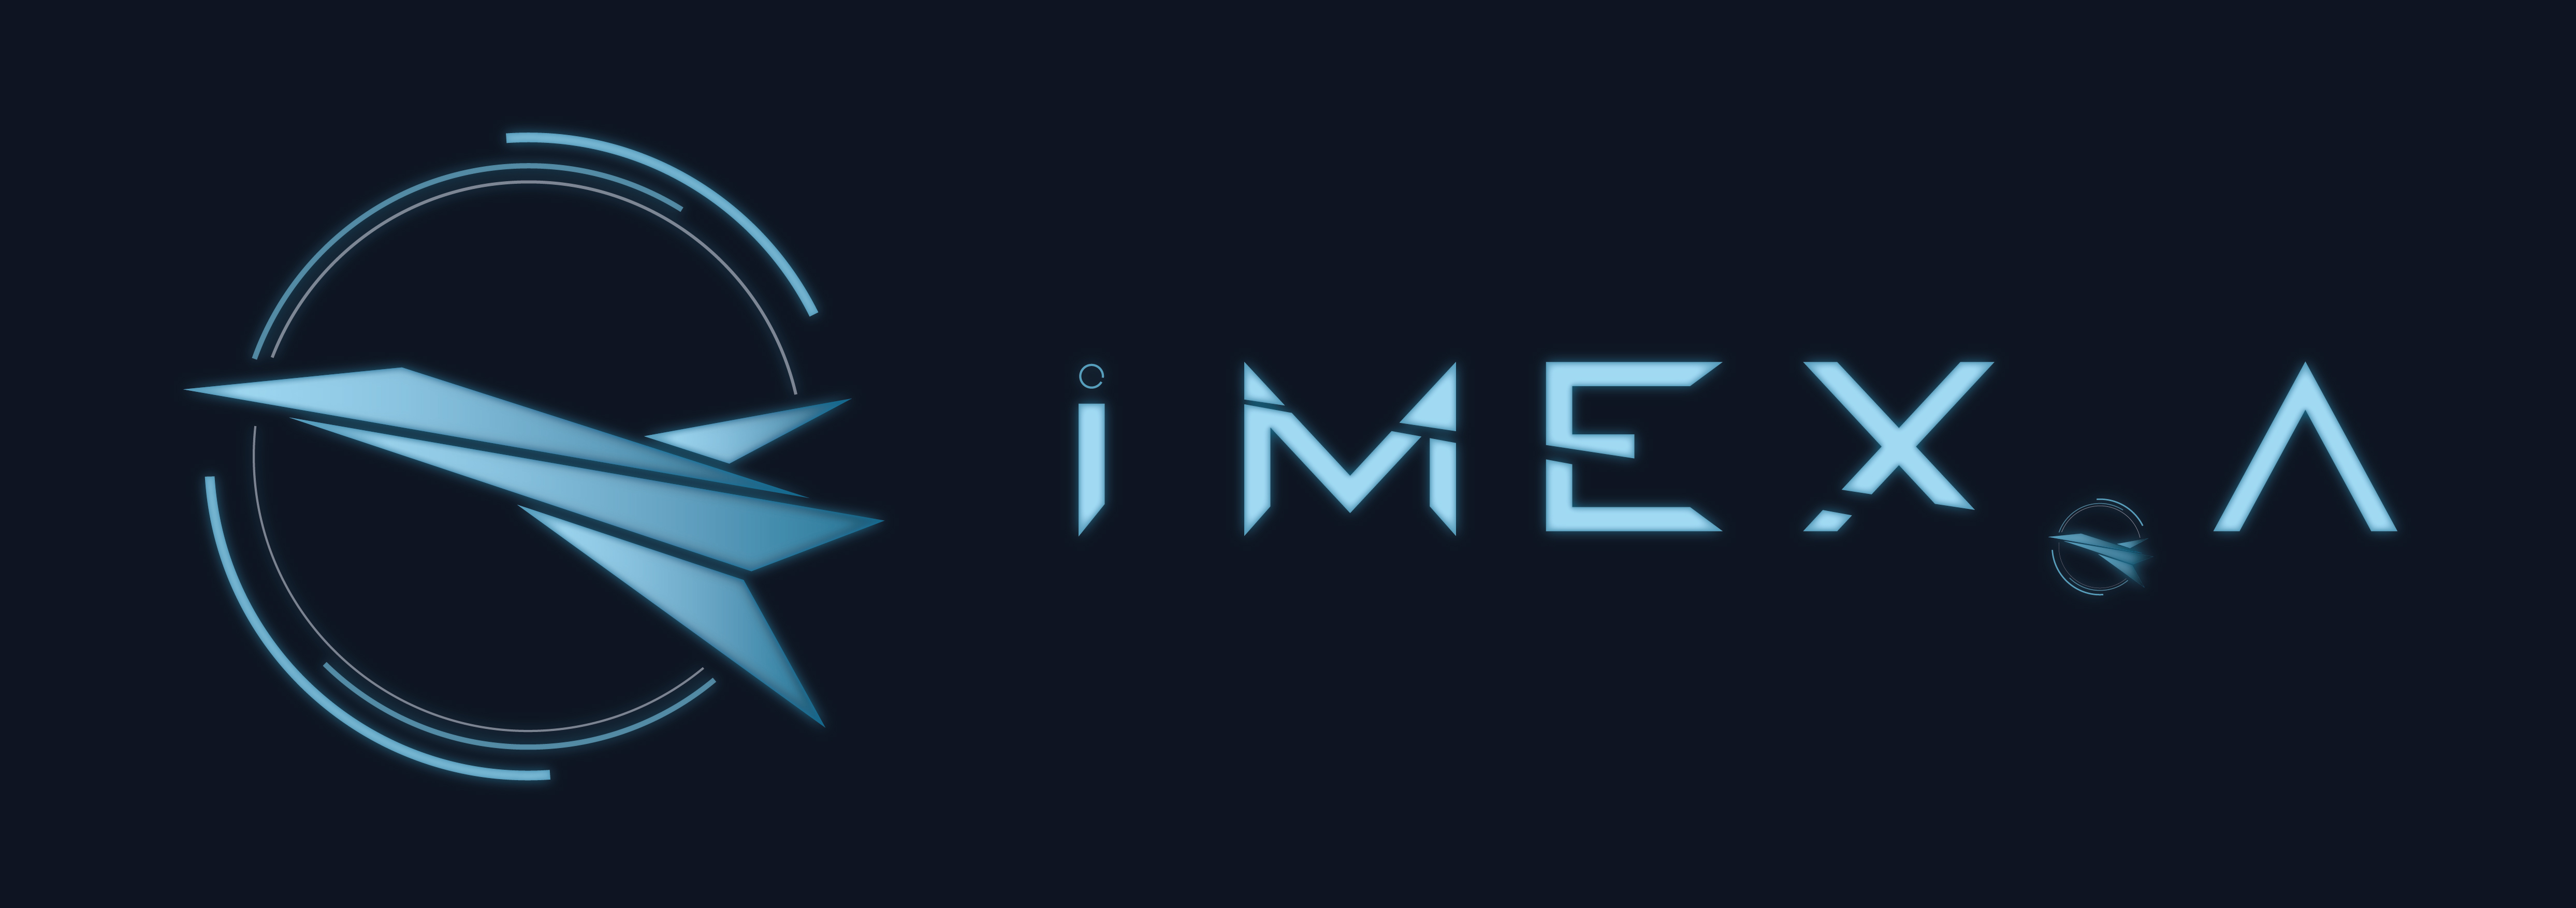 Logo IMEX.A